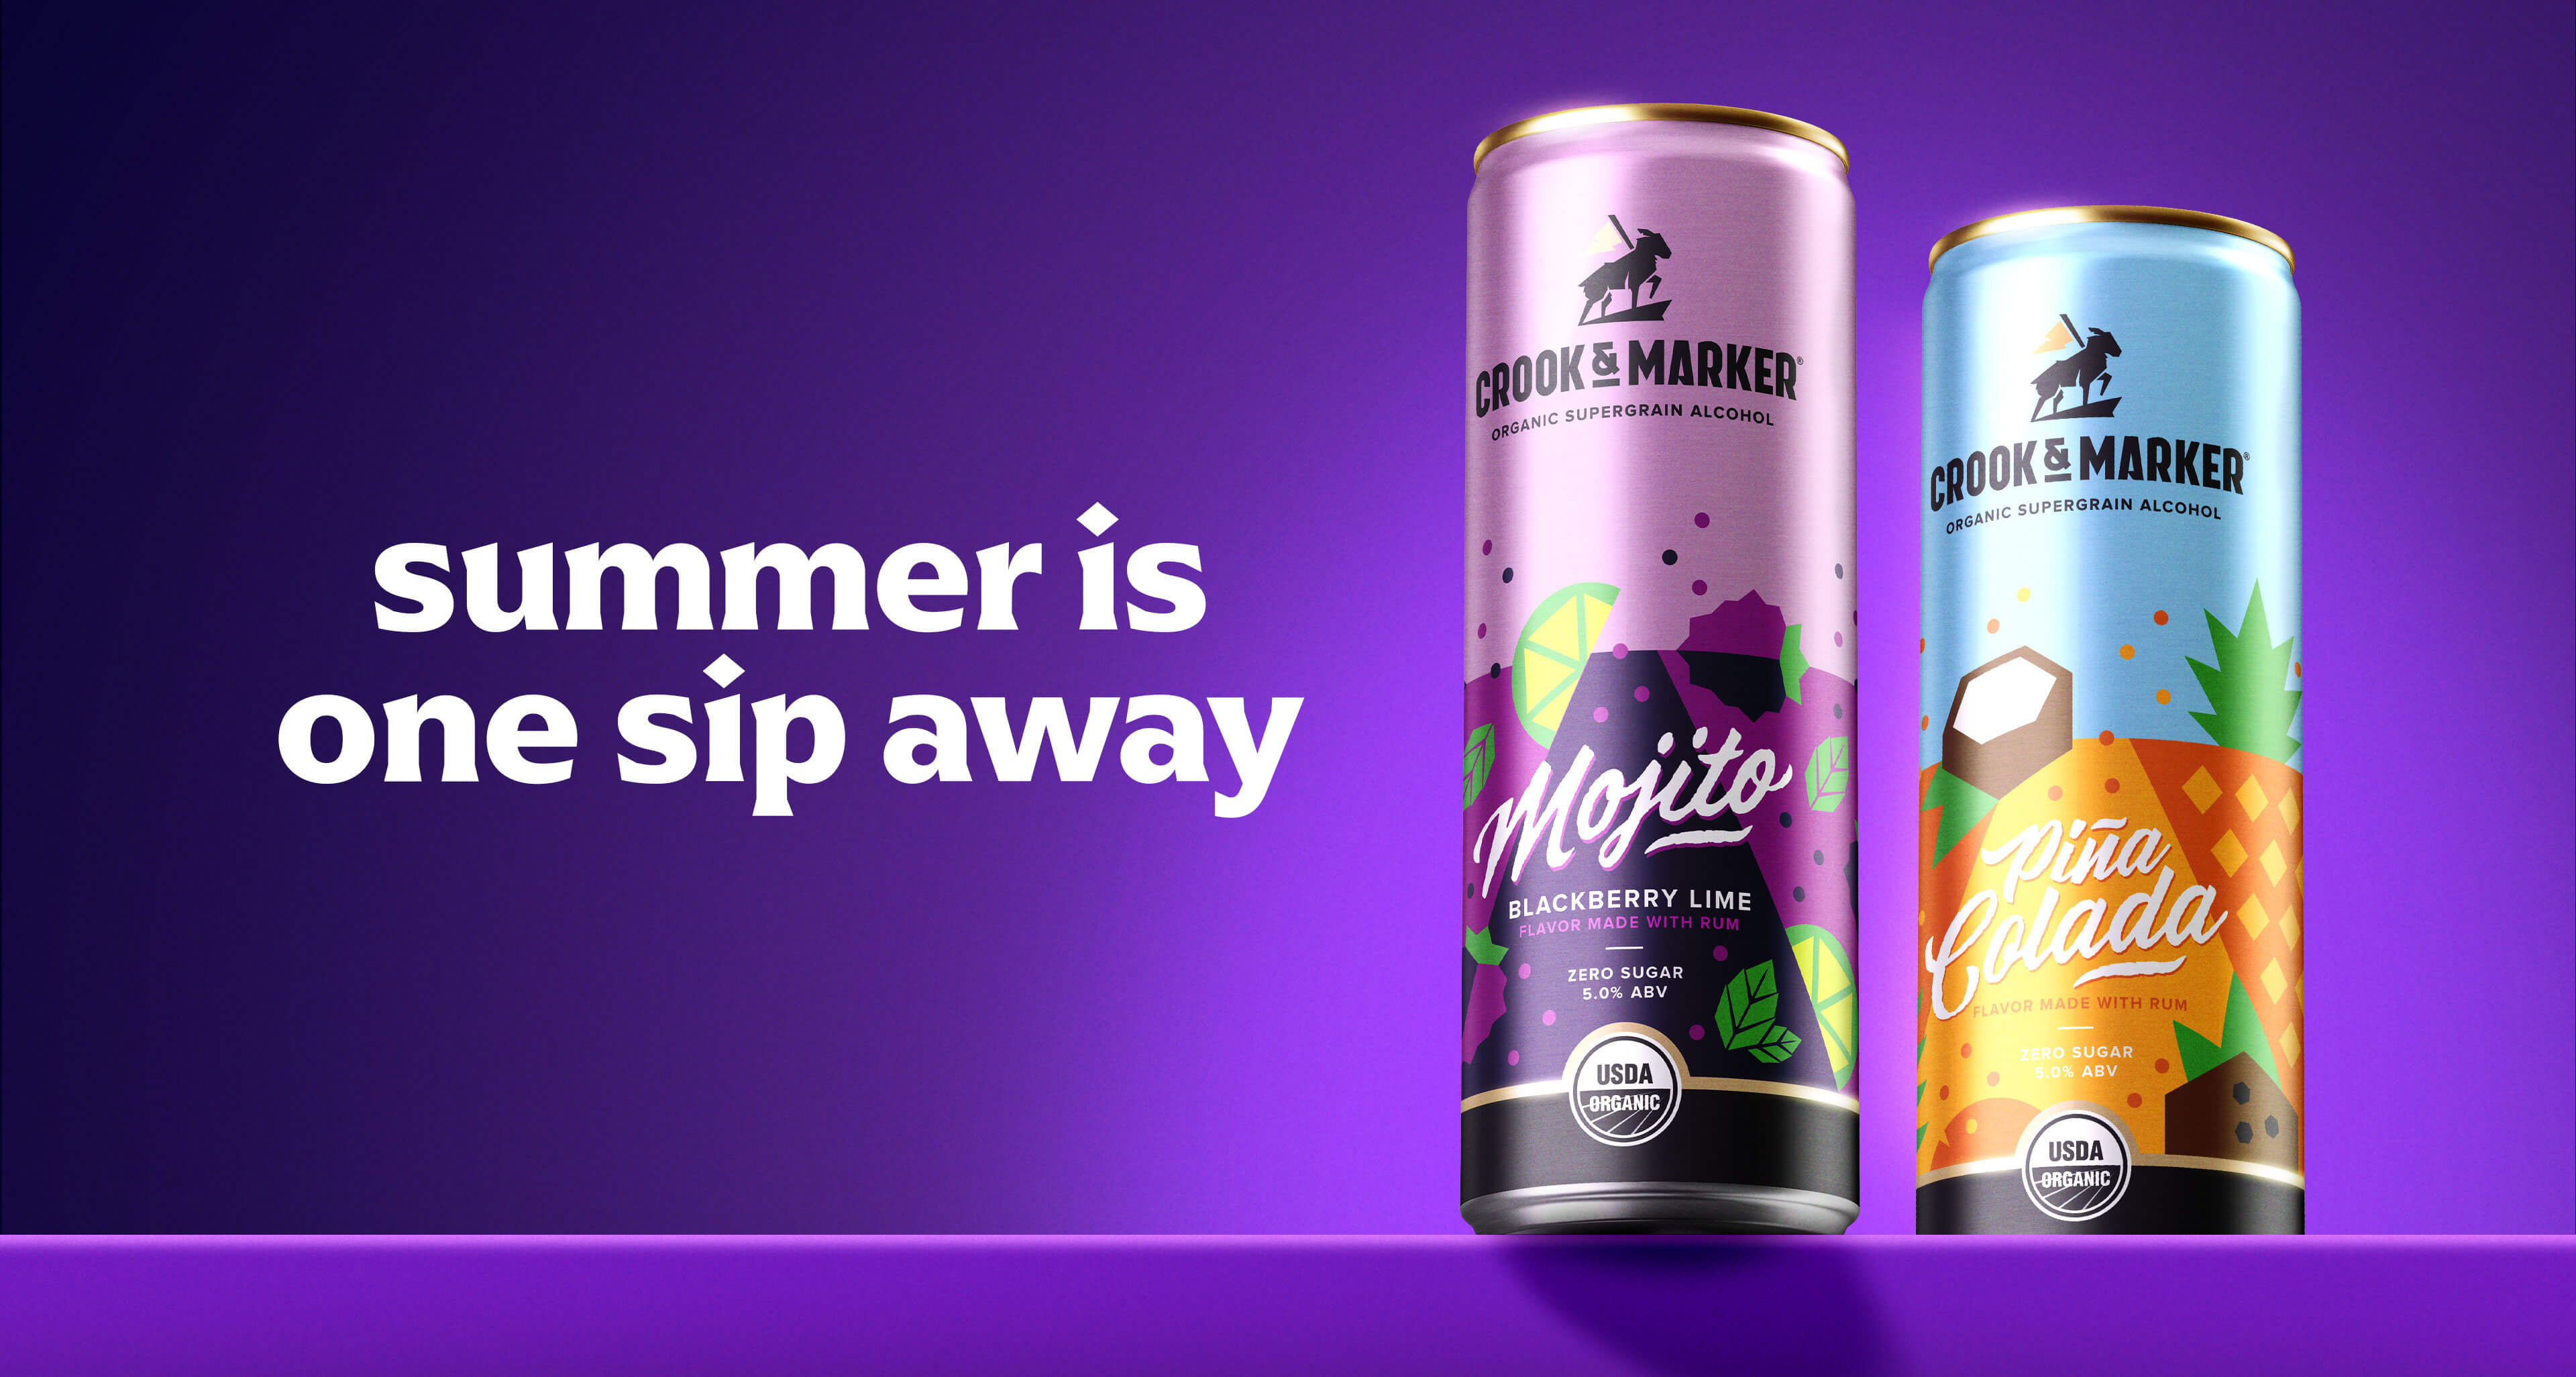 Crook & Marker - Summer is one sip away